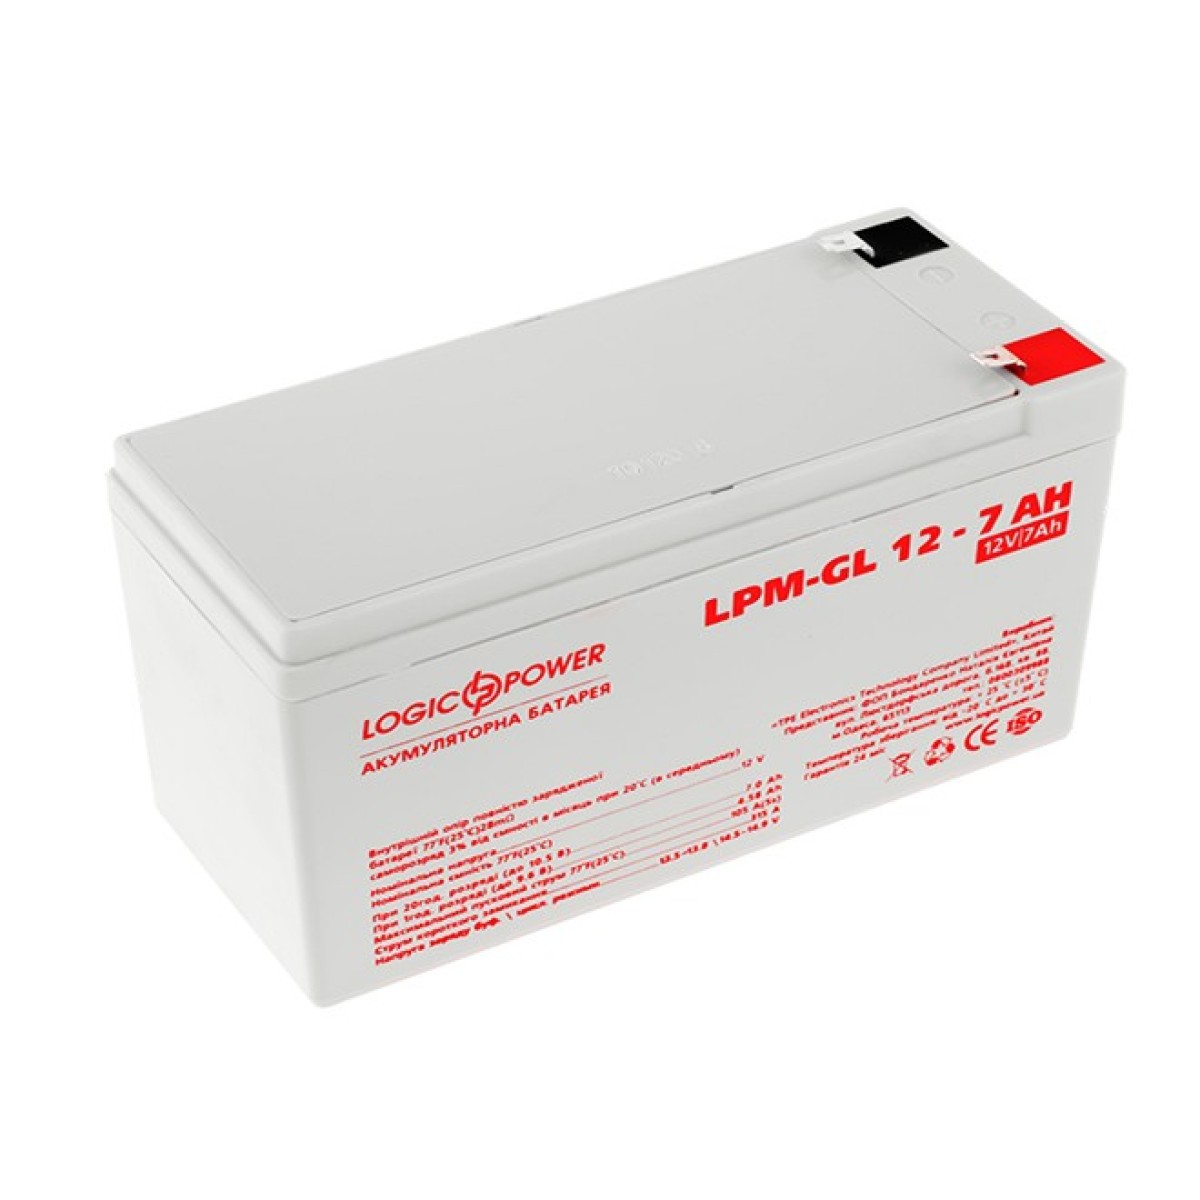 Акумулятор гелевий LPM-GL 12 - 7 AH 256_256.jpg